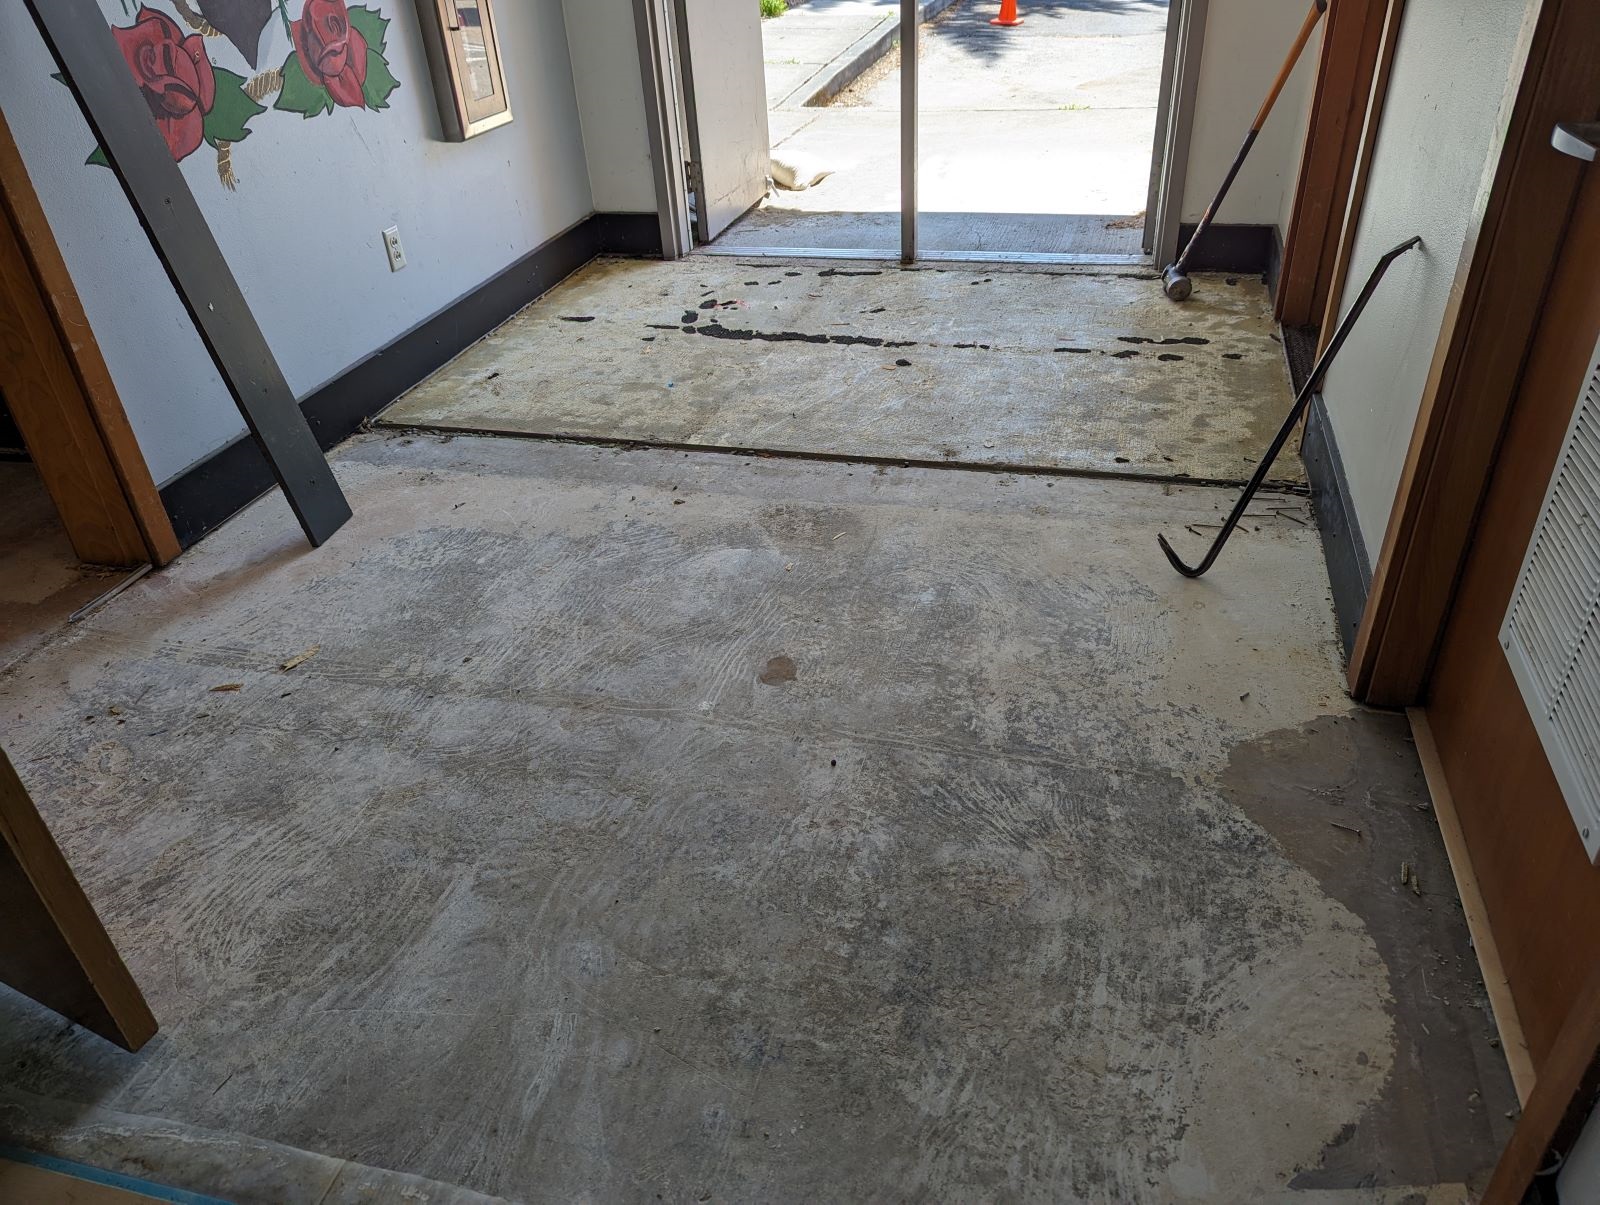 KTUB renovations showing flooring work